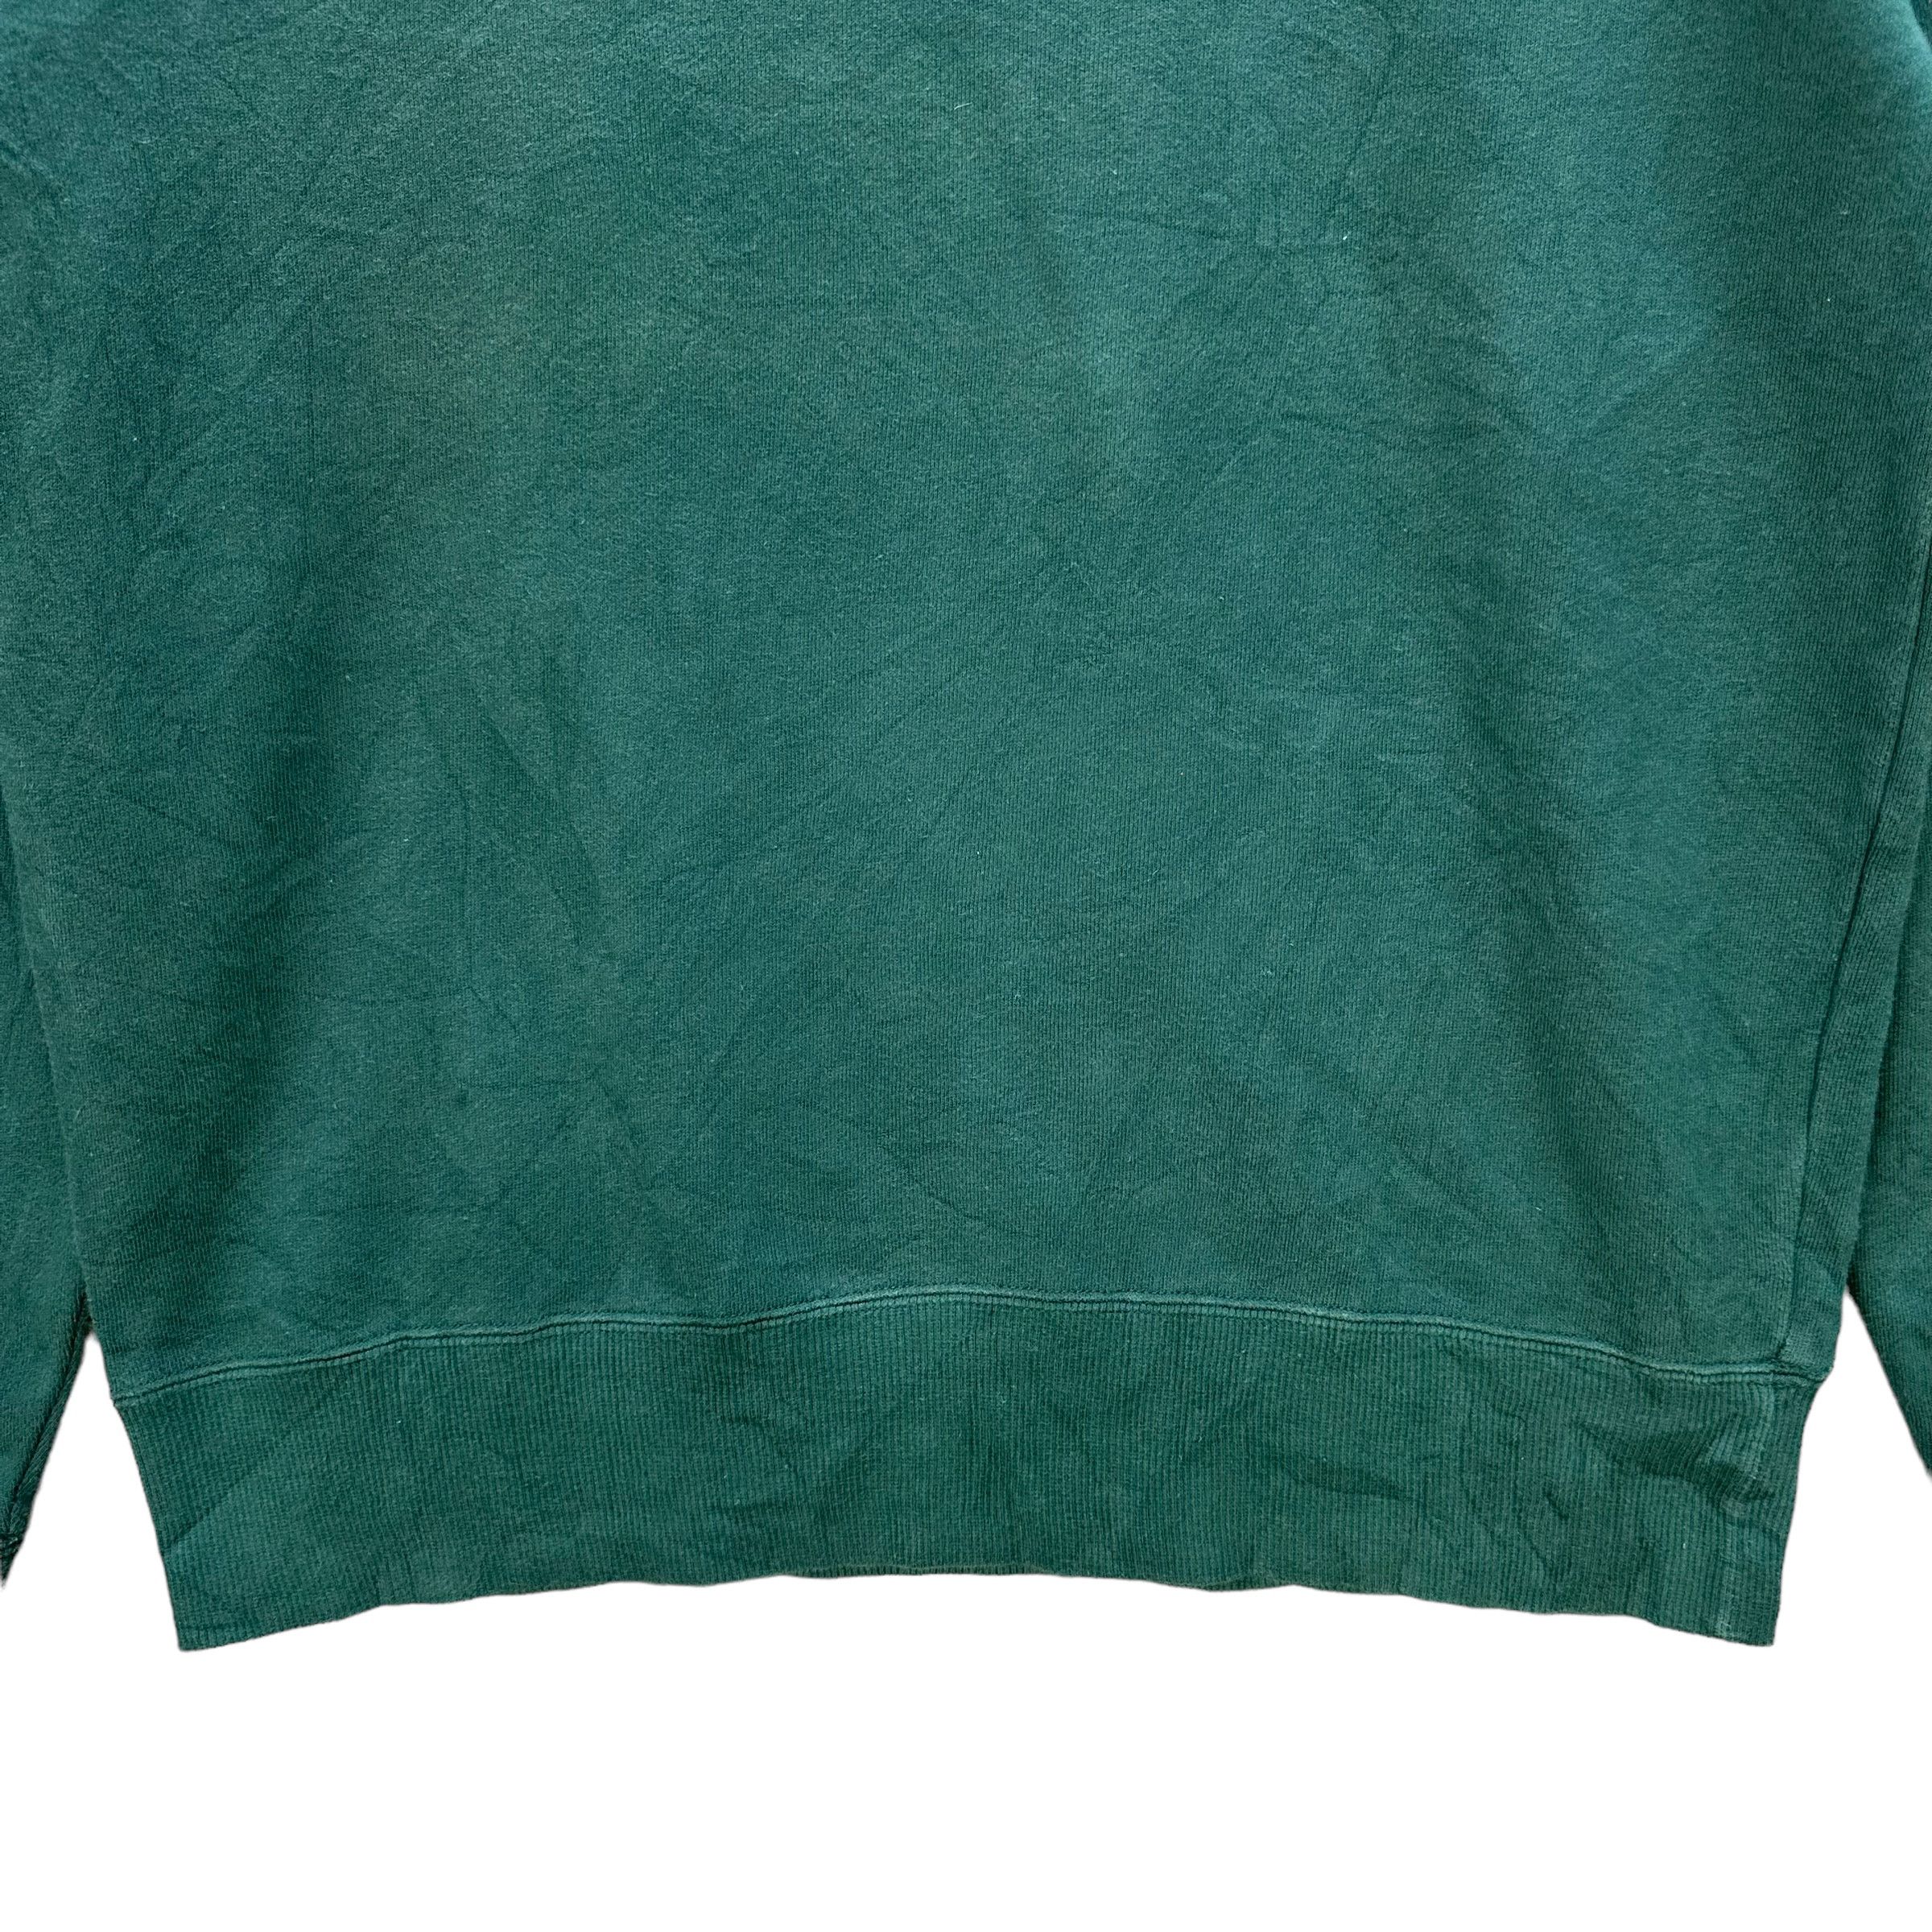 Champion Green Sweatshirts #9125-59 - 3